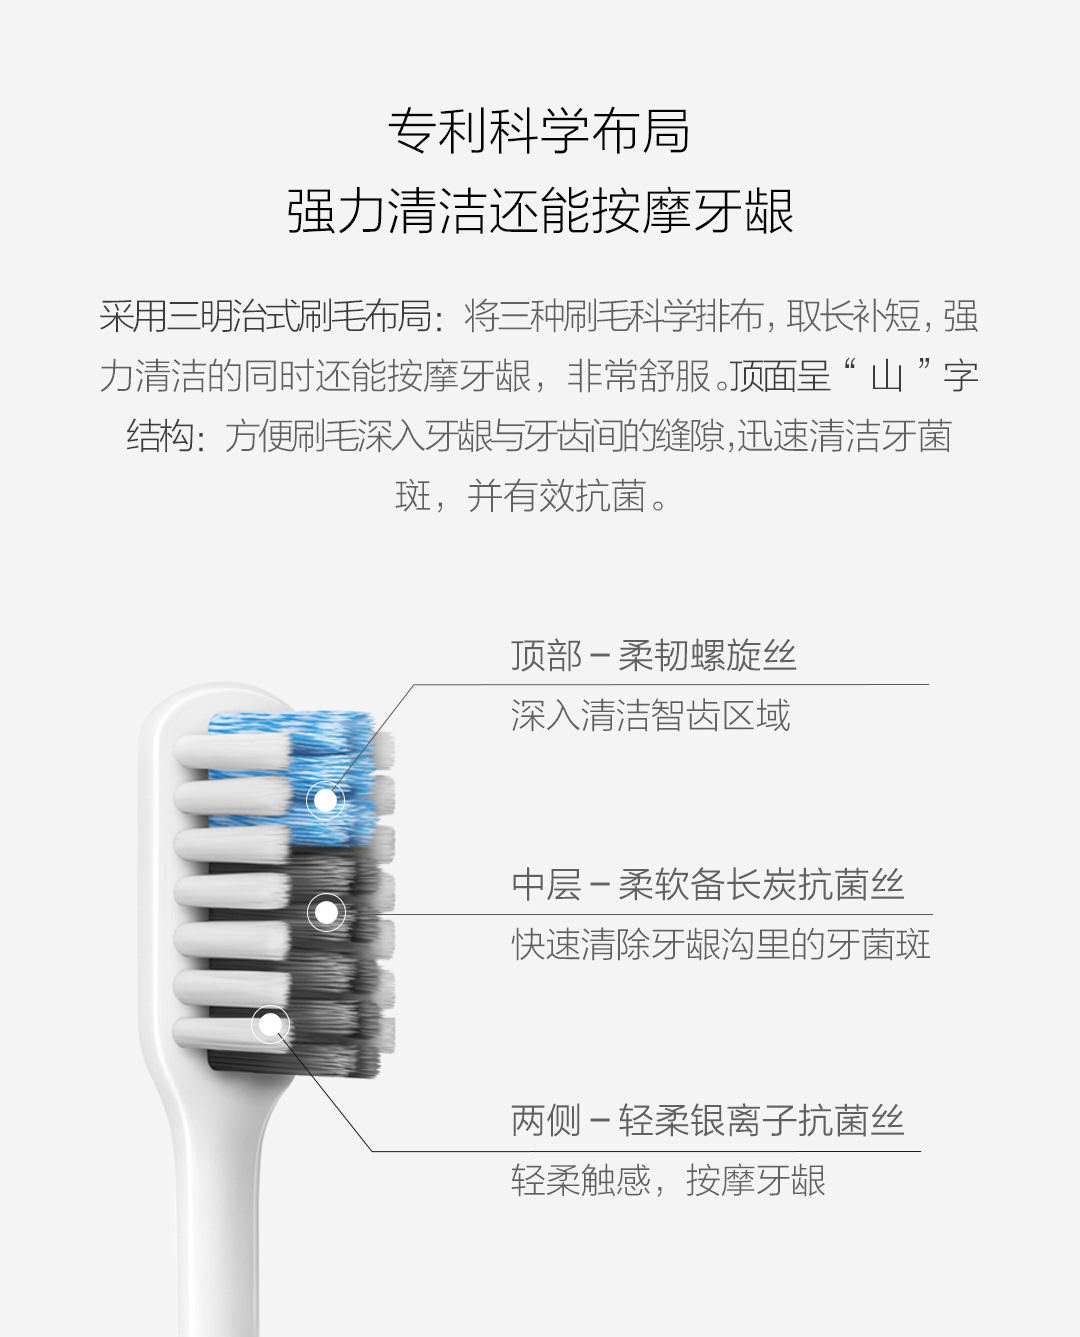 xiaomi dr.bei pap bass method support toothbrush